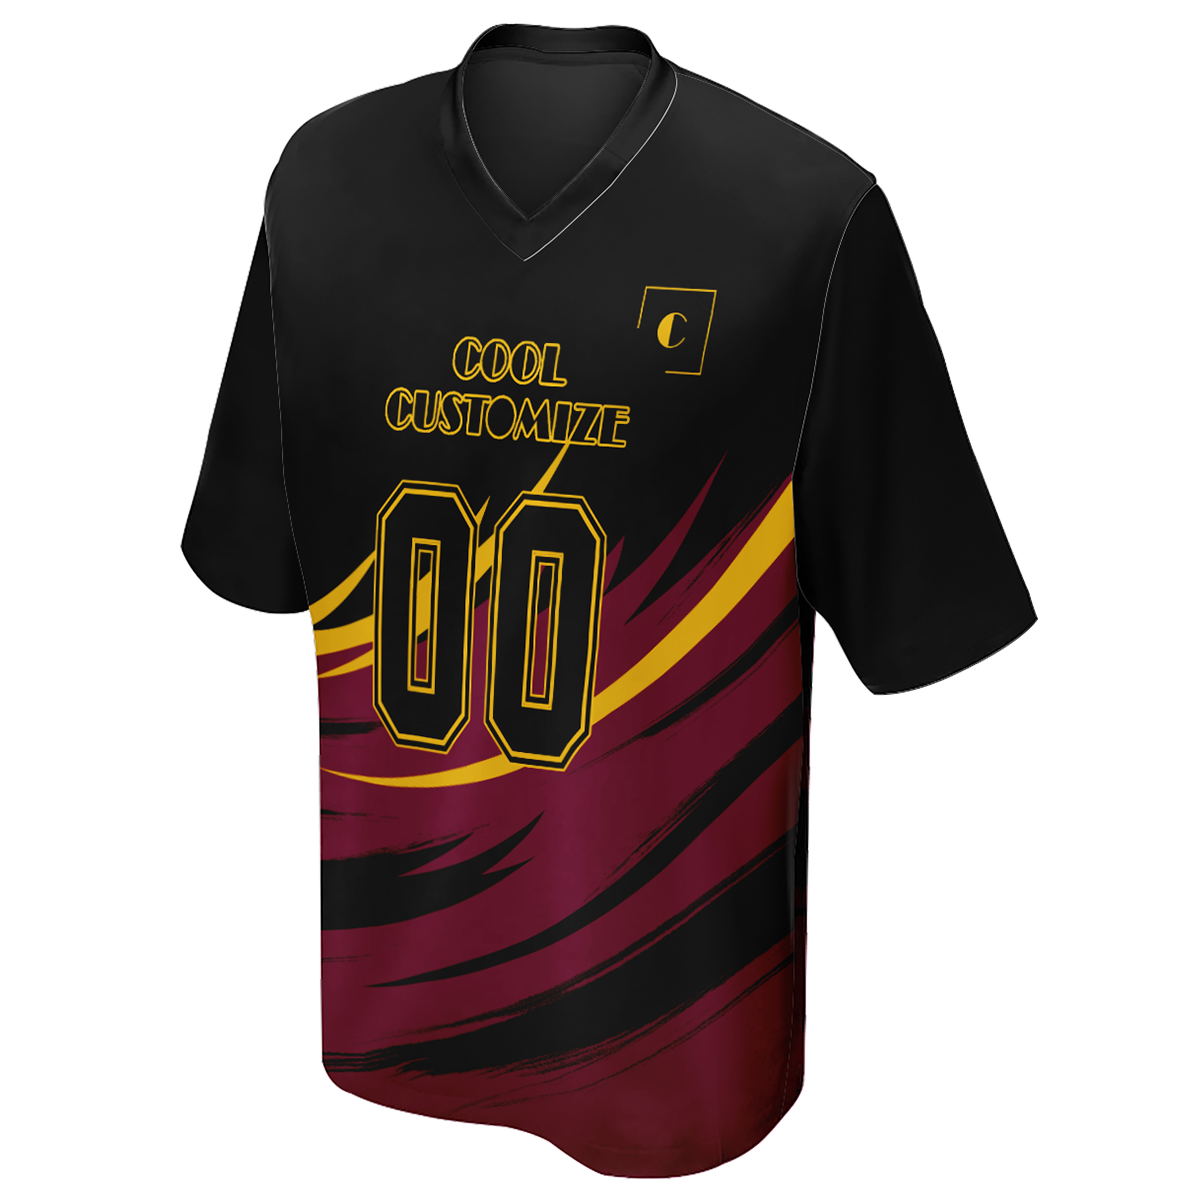 Promotional Cheap Sublimated Custom Soccer Shirt Uniforms Football Club Set Printed Design Soccer Jerseys